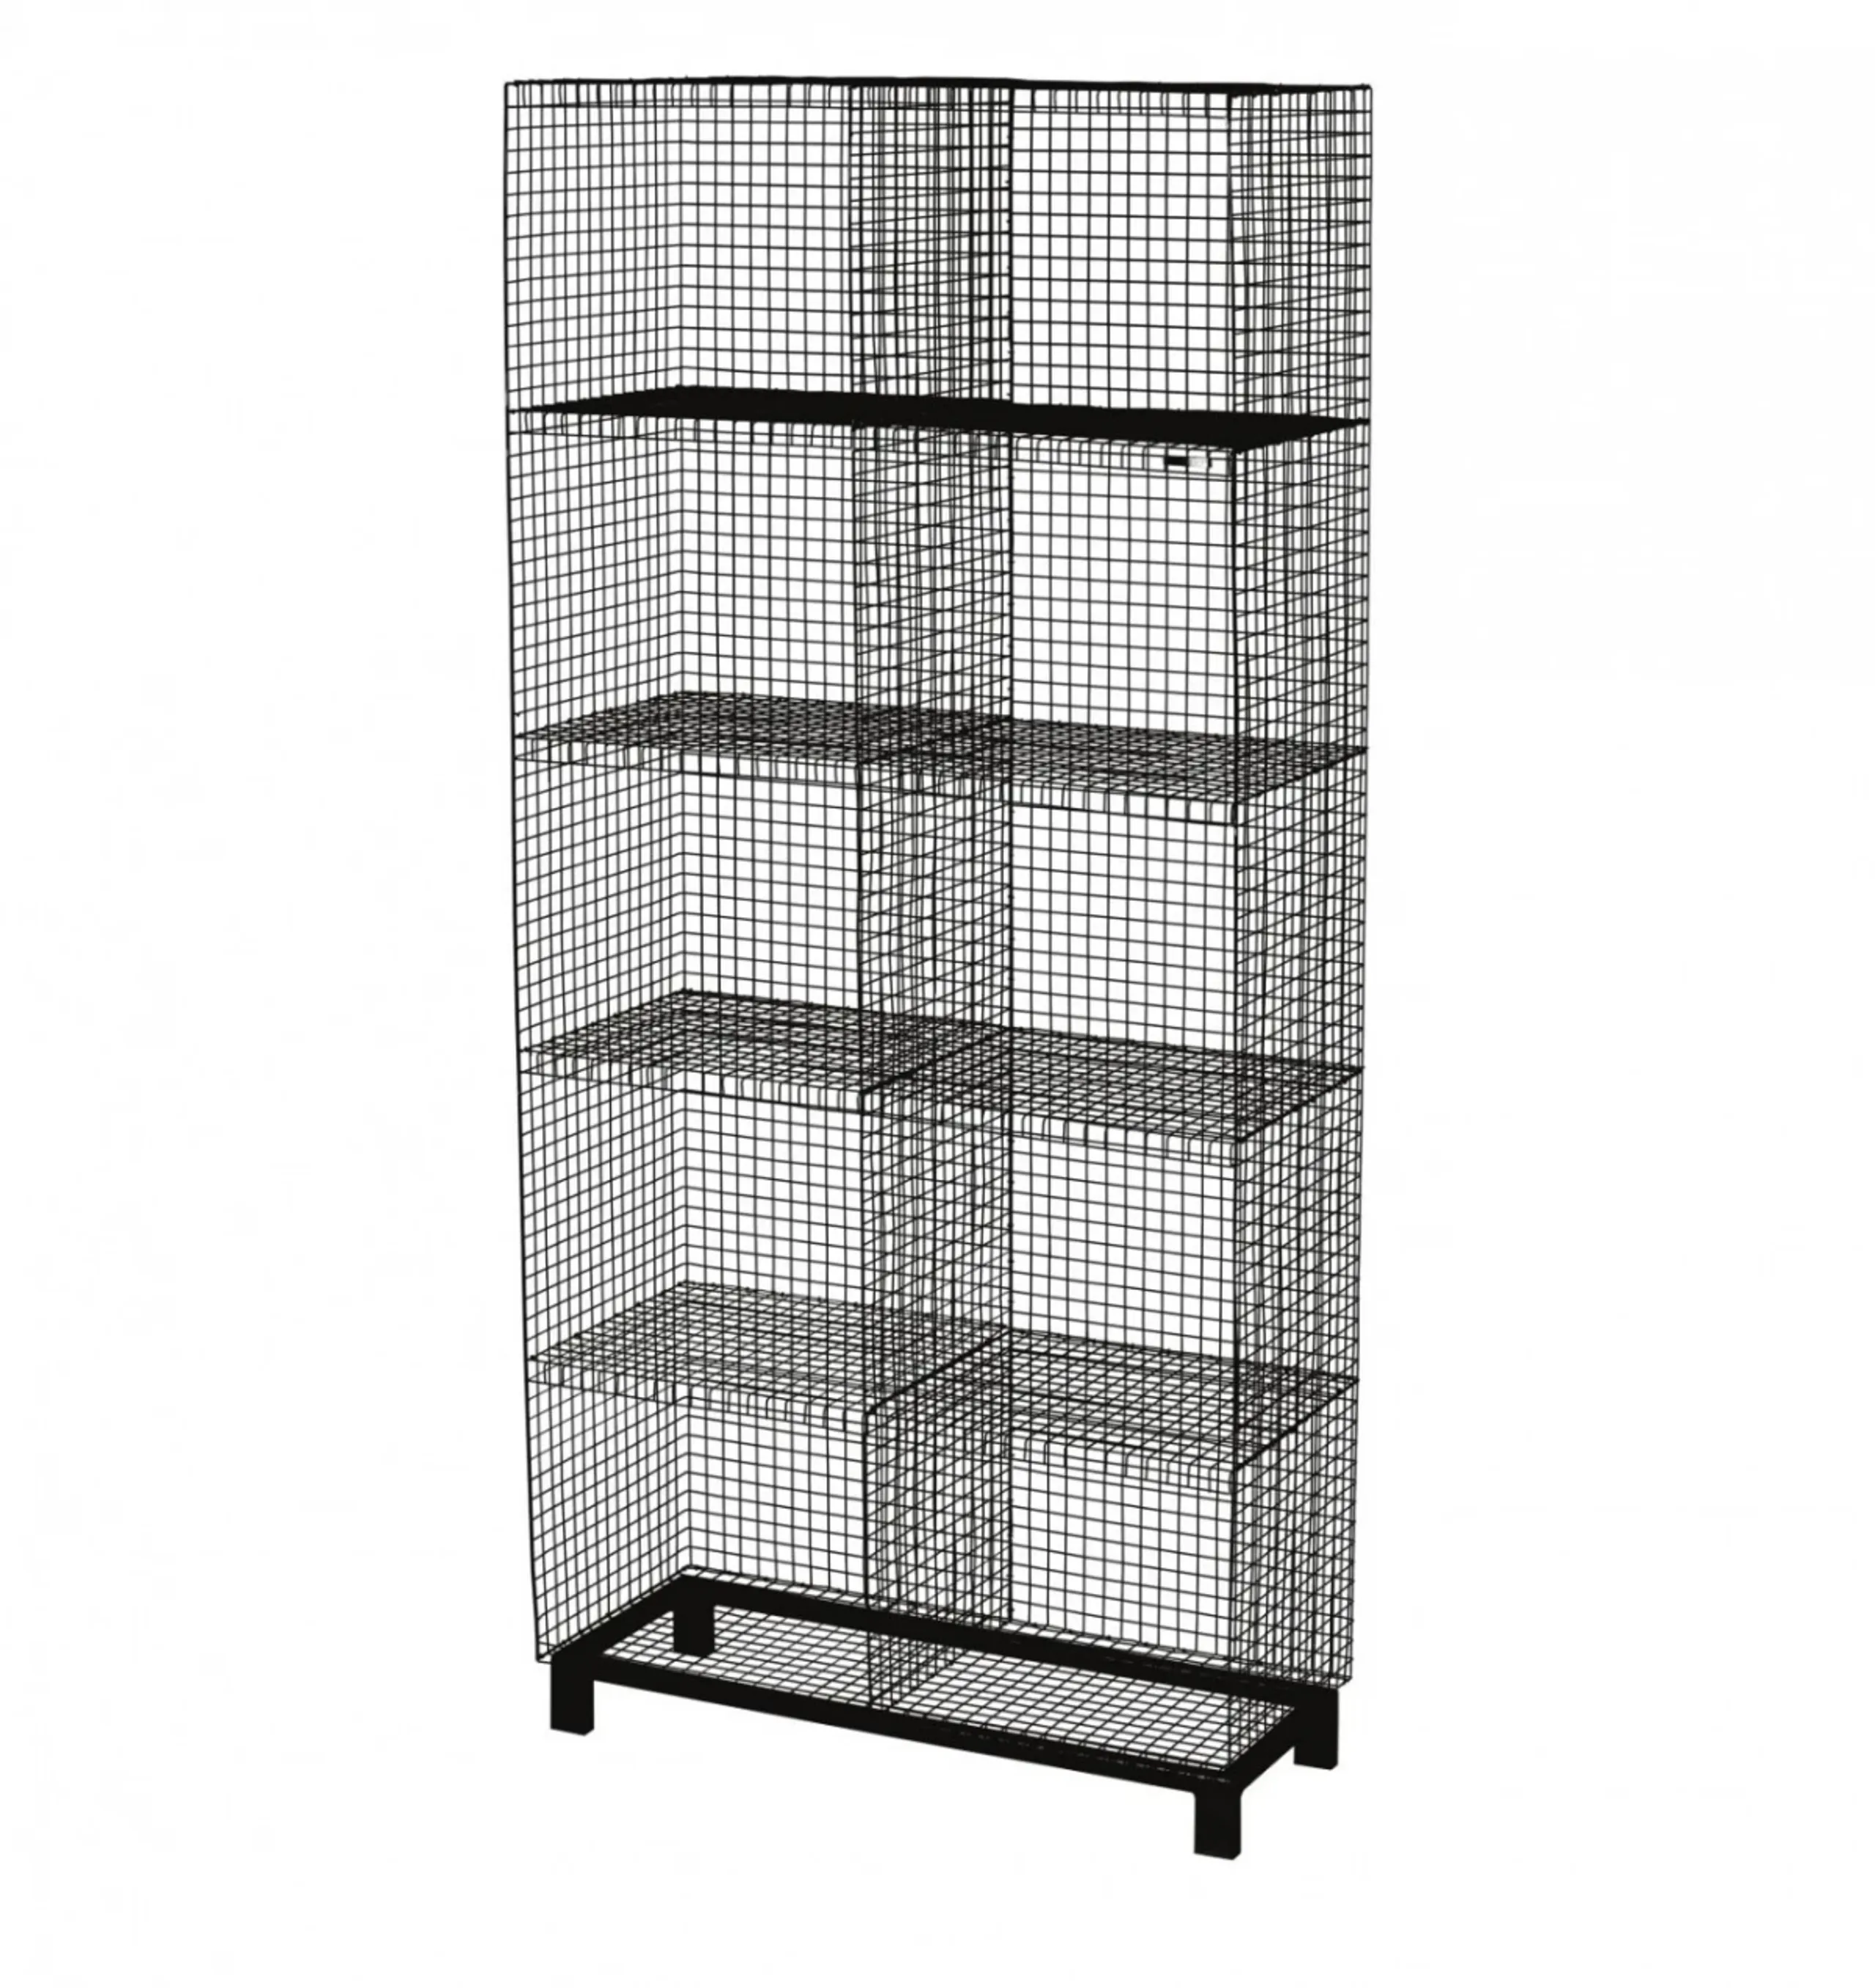 Kalager Design  - Regal - Grid Cabinet with legs - Black